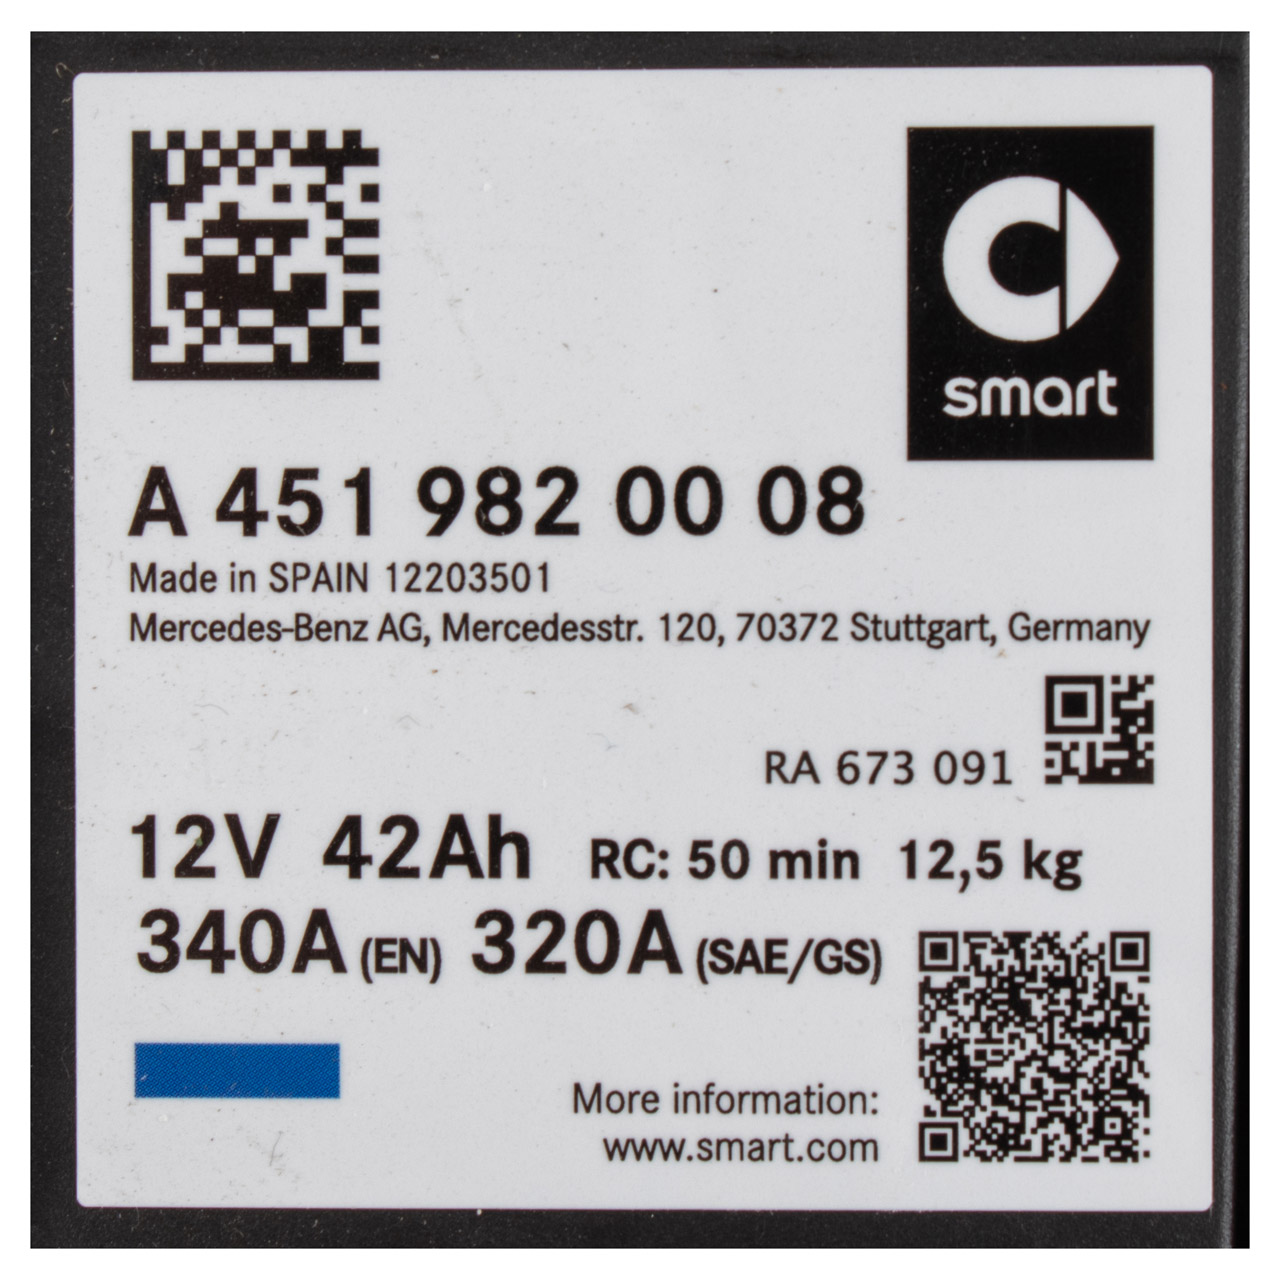 ORIGINAL SMART Autobatterie Batterie Starterbatterie 12V 42Ah 340A 4519820008